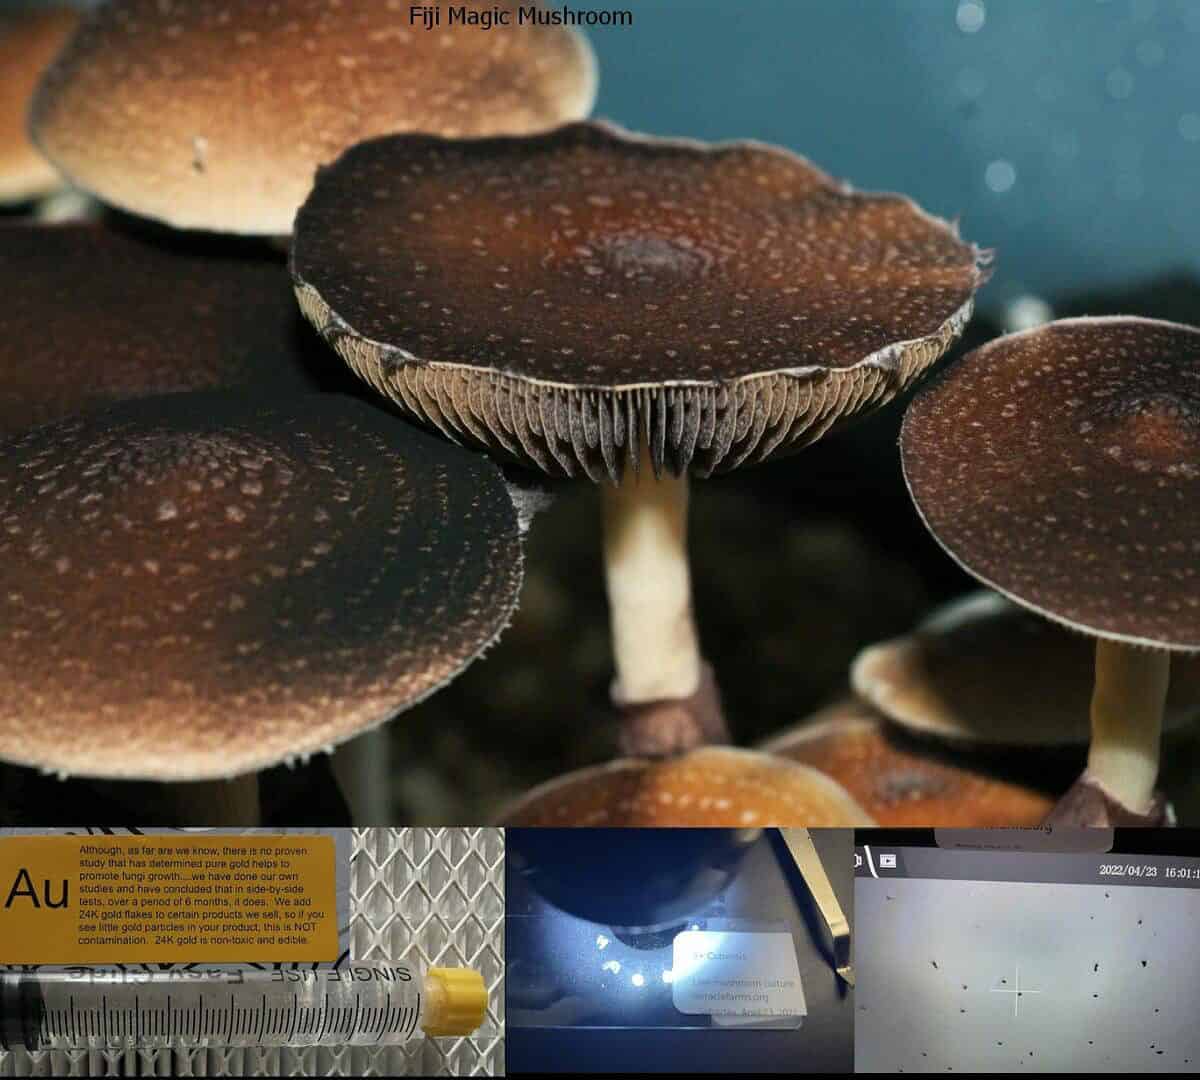 Fiji Magic Mushroom spore syringe